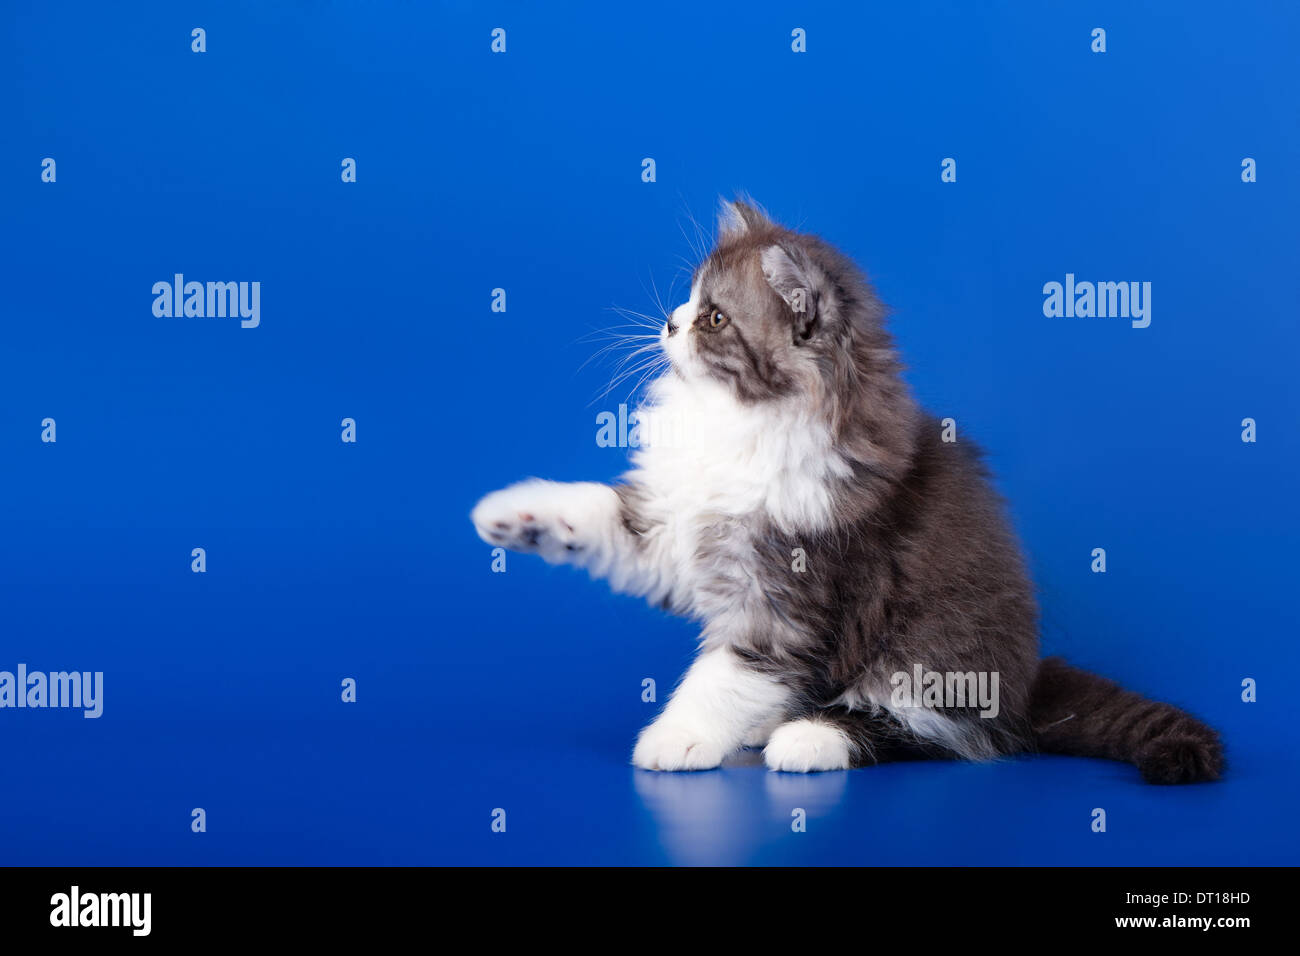 Scottish purebred cat on blue background Stock Photo